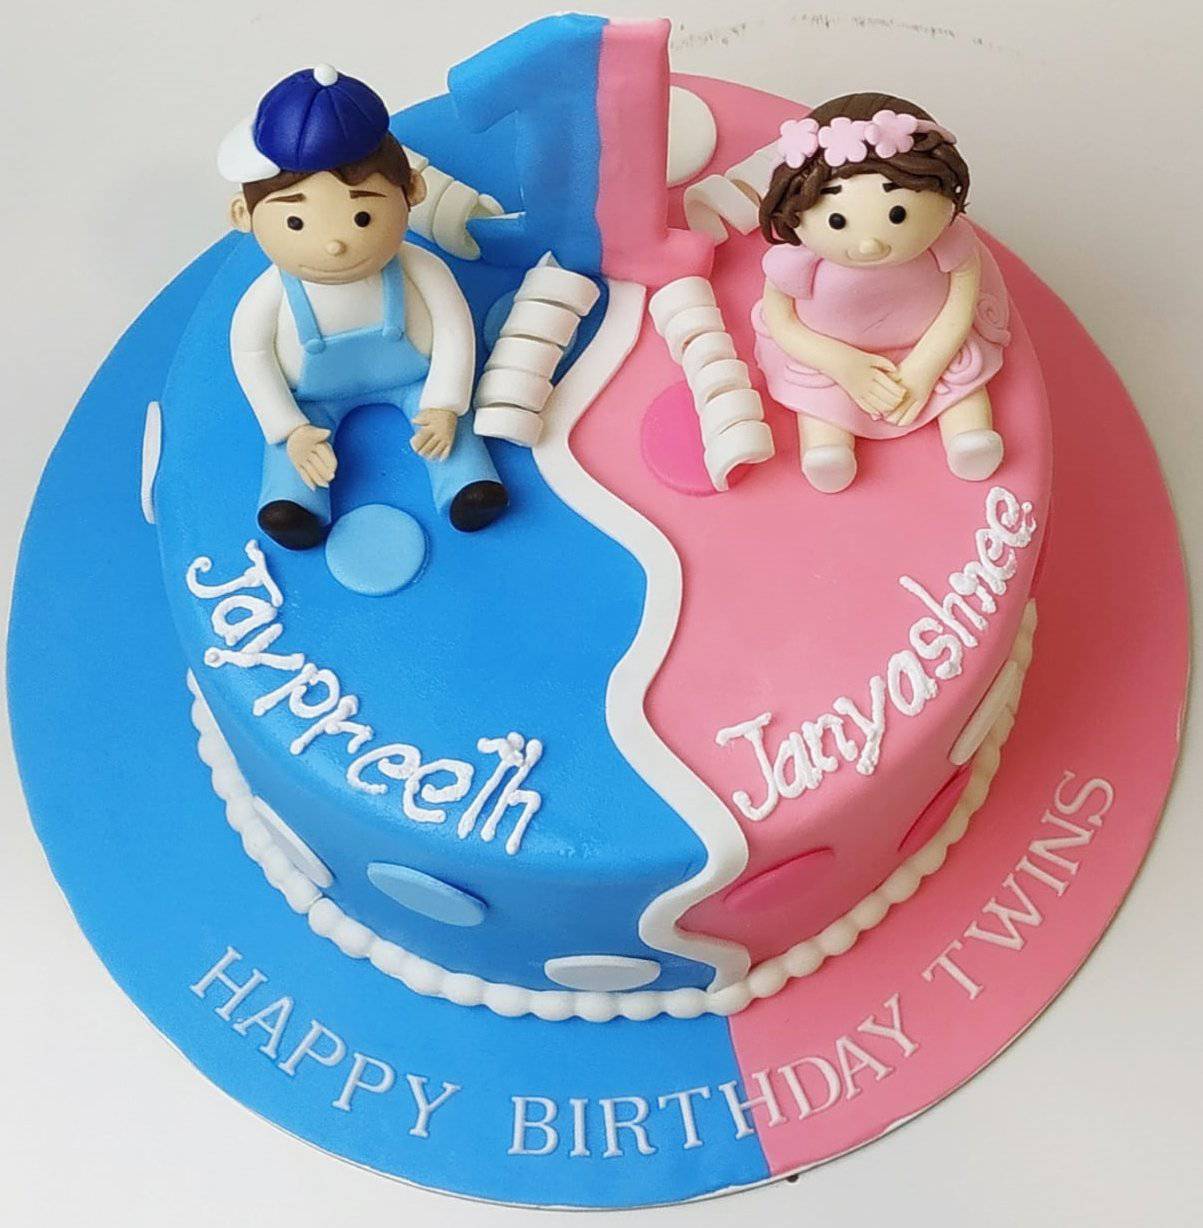 Happy Birthday cake design for Twins/Baby shower cake design/Cake design  ideas for#boy#girl - YouTube